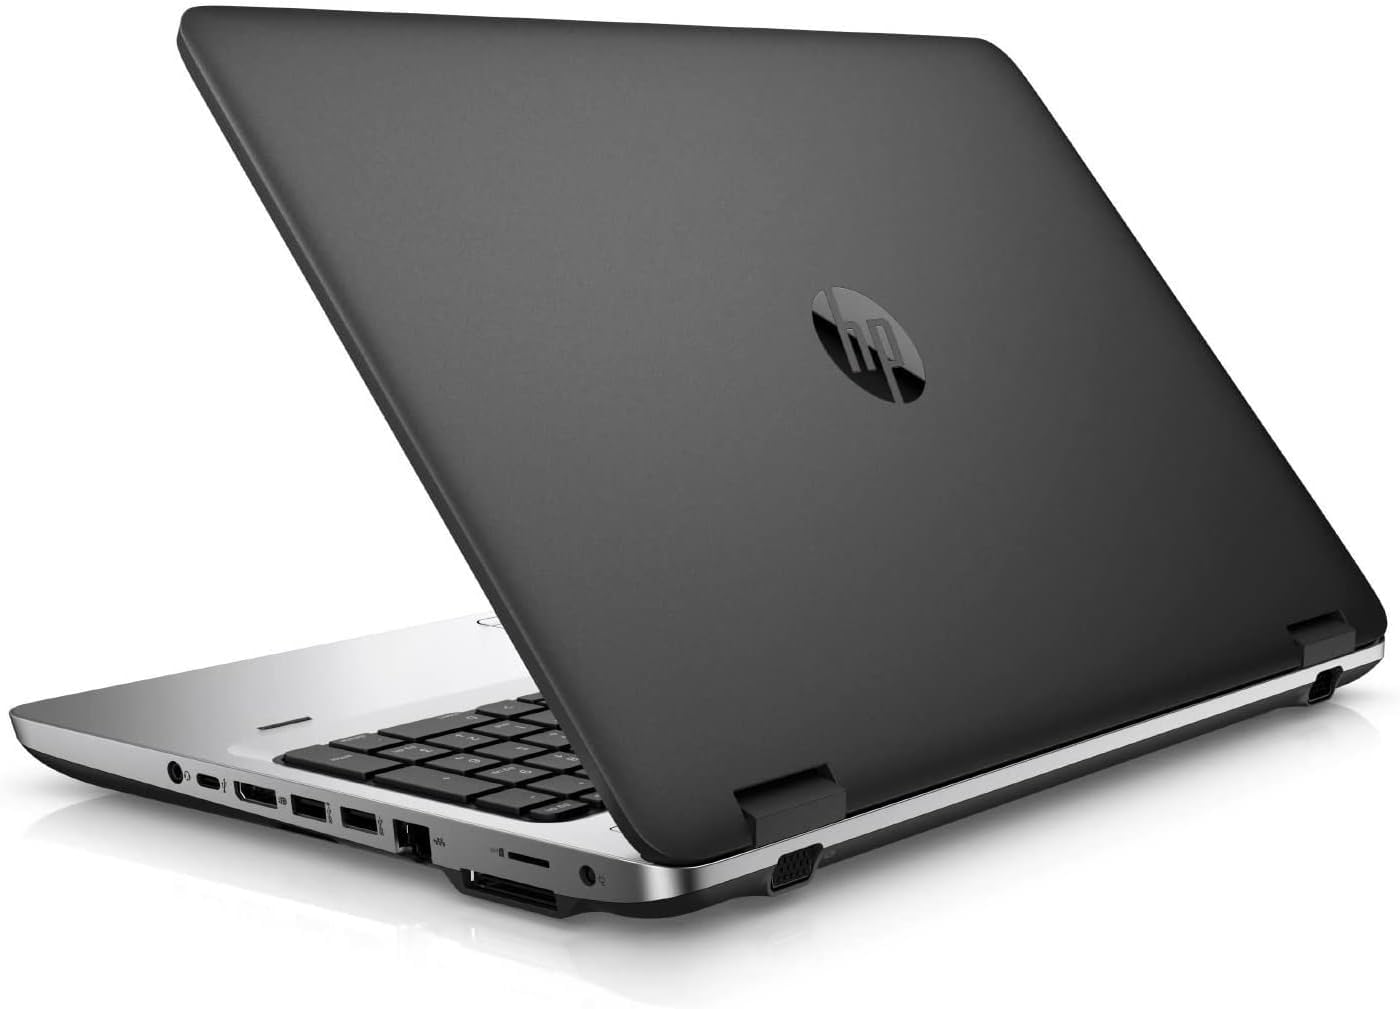 HP ProBook 650 G3 15.6" FHD (1920x1080) Business Laptop, Intel Dual Core i7-7820HQ, 2.9GHz Up to 3.9GHz, 16GB Ram, 512GB SSD, Backlit Keyboard, Finger Printer, Camera, Win 10 Pro (Renewed)